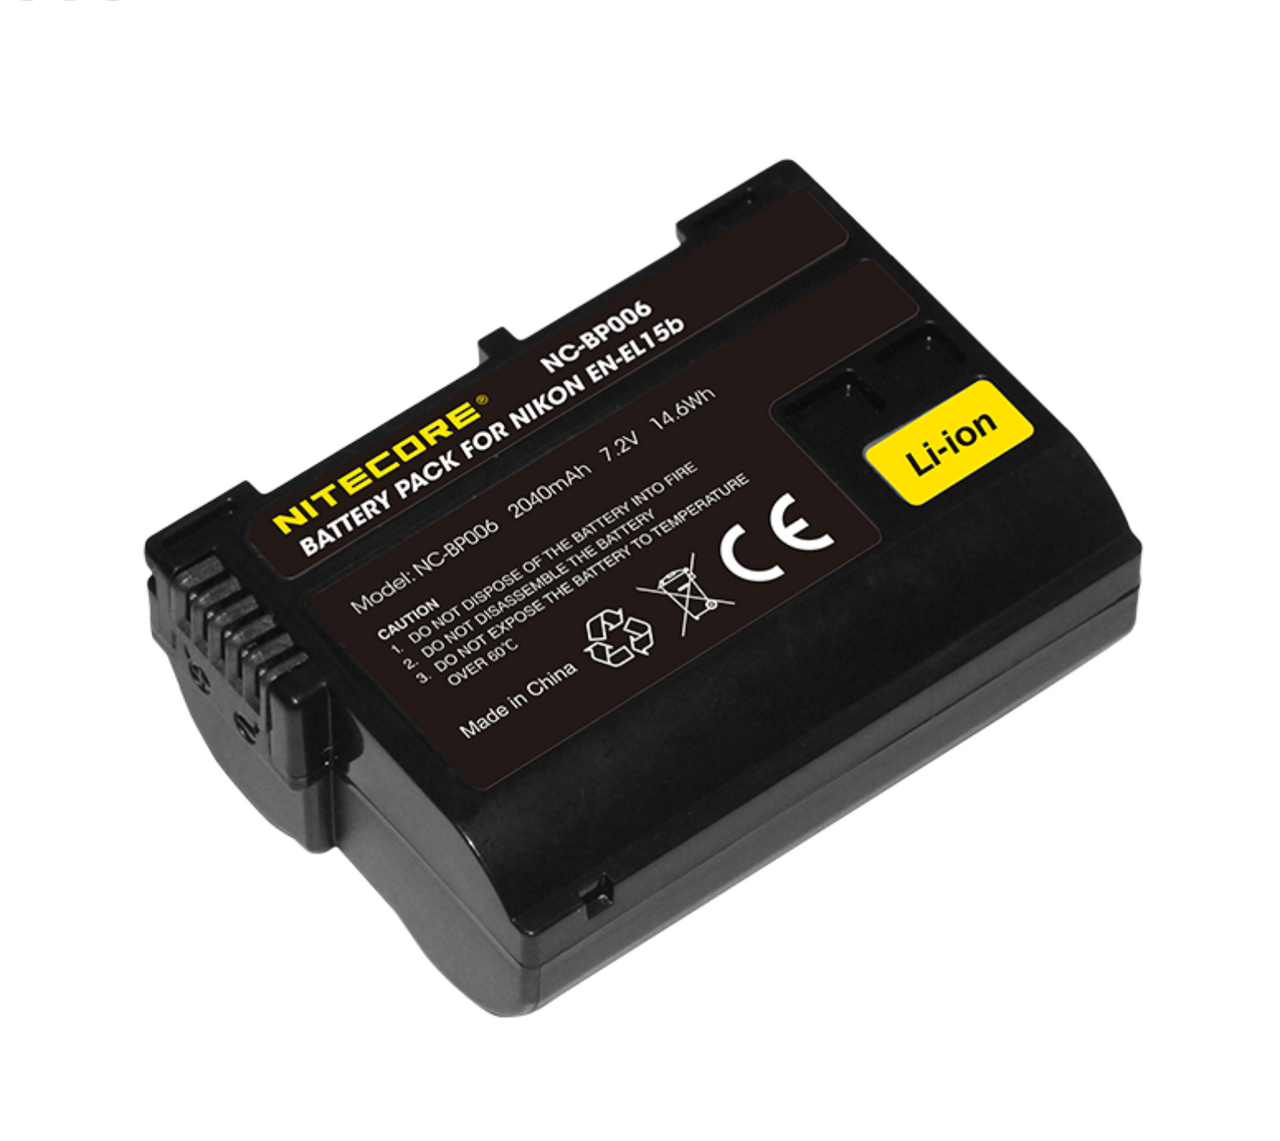 Nitecore EN-EL15b Battery Pack for Nikon 相機專用鋰電池